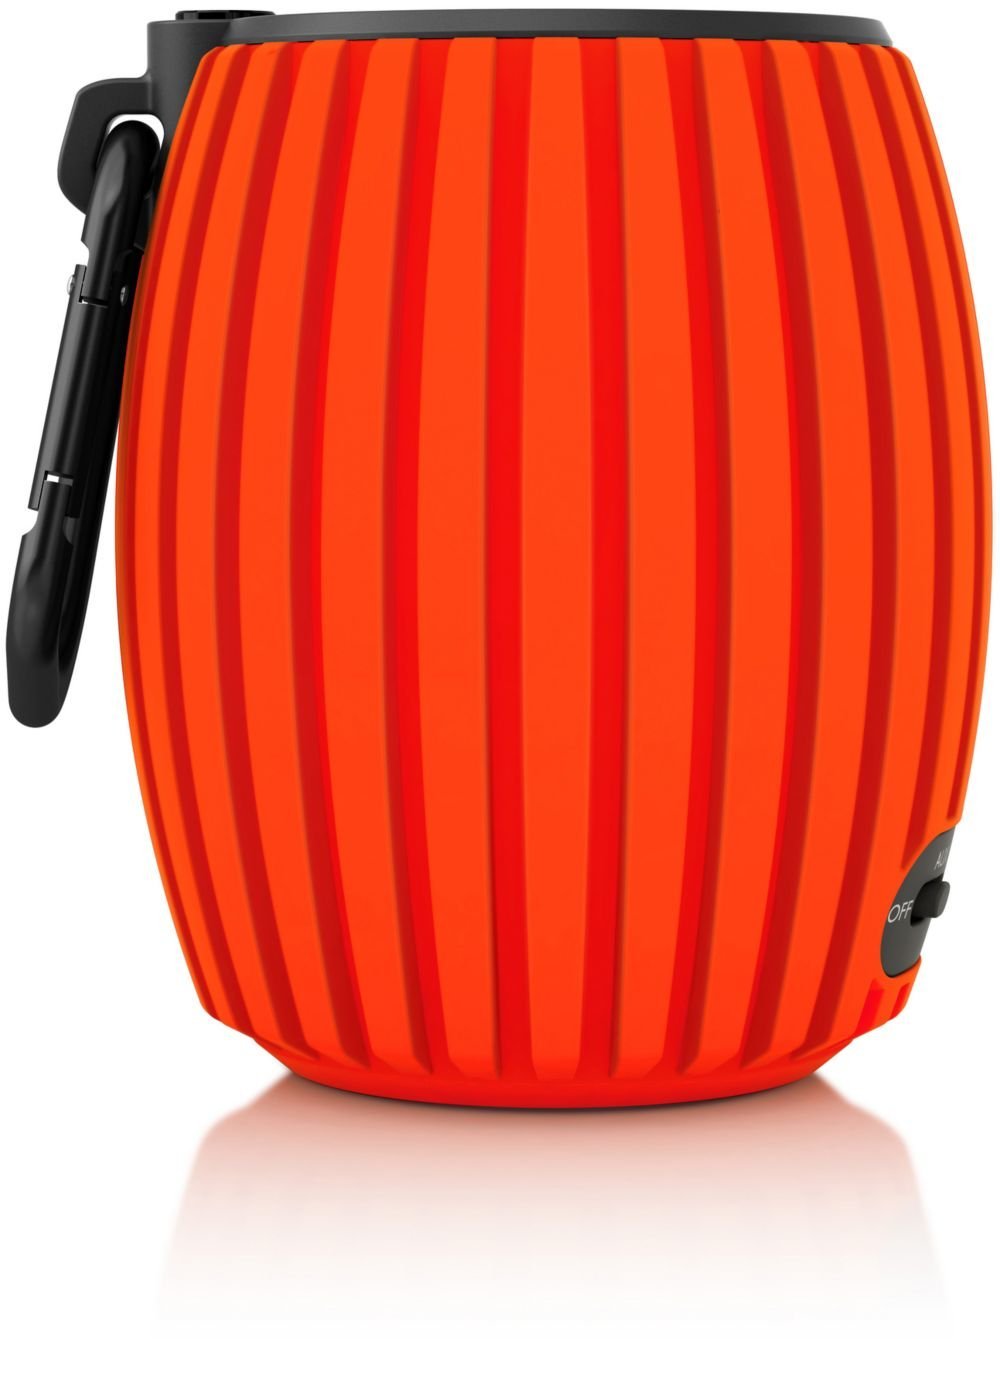 Loa Philips SoundShooter Wireless Bluetooth Portable Speaker SBT30ORG/27 (Orange)